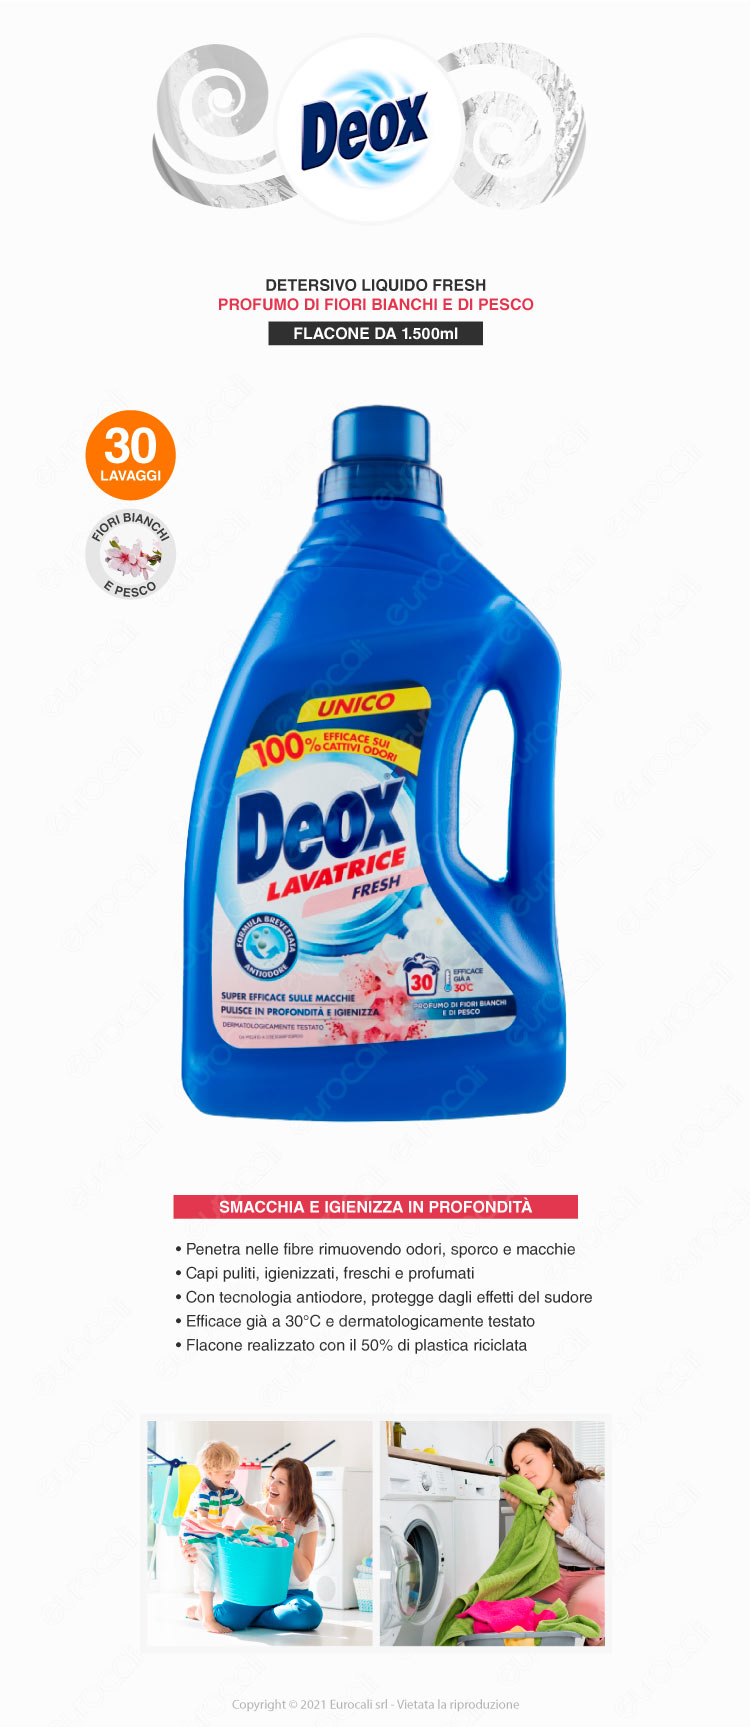 deox detersivo lavatrice fresh